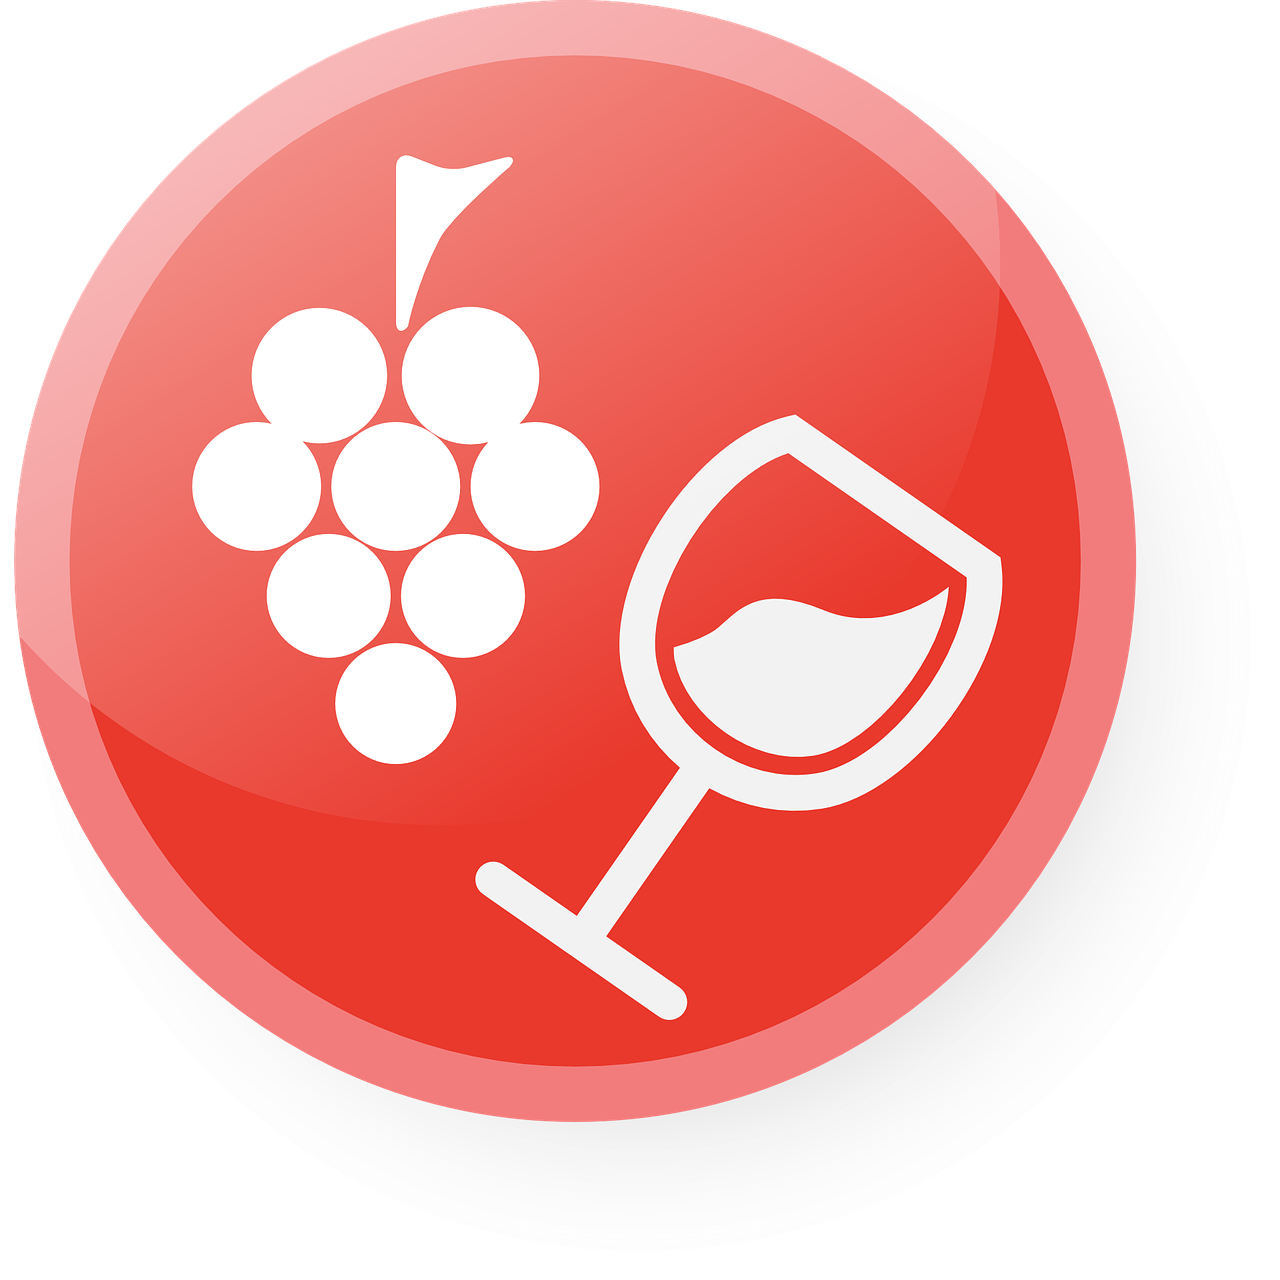 wine glass icon free photo